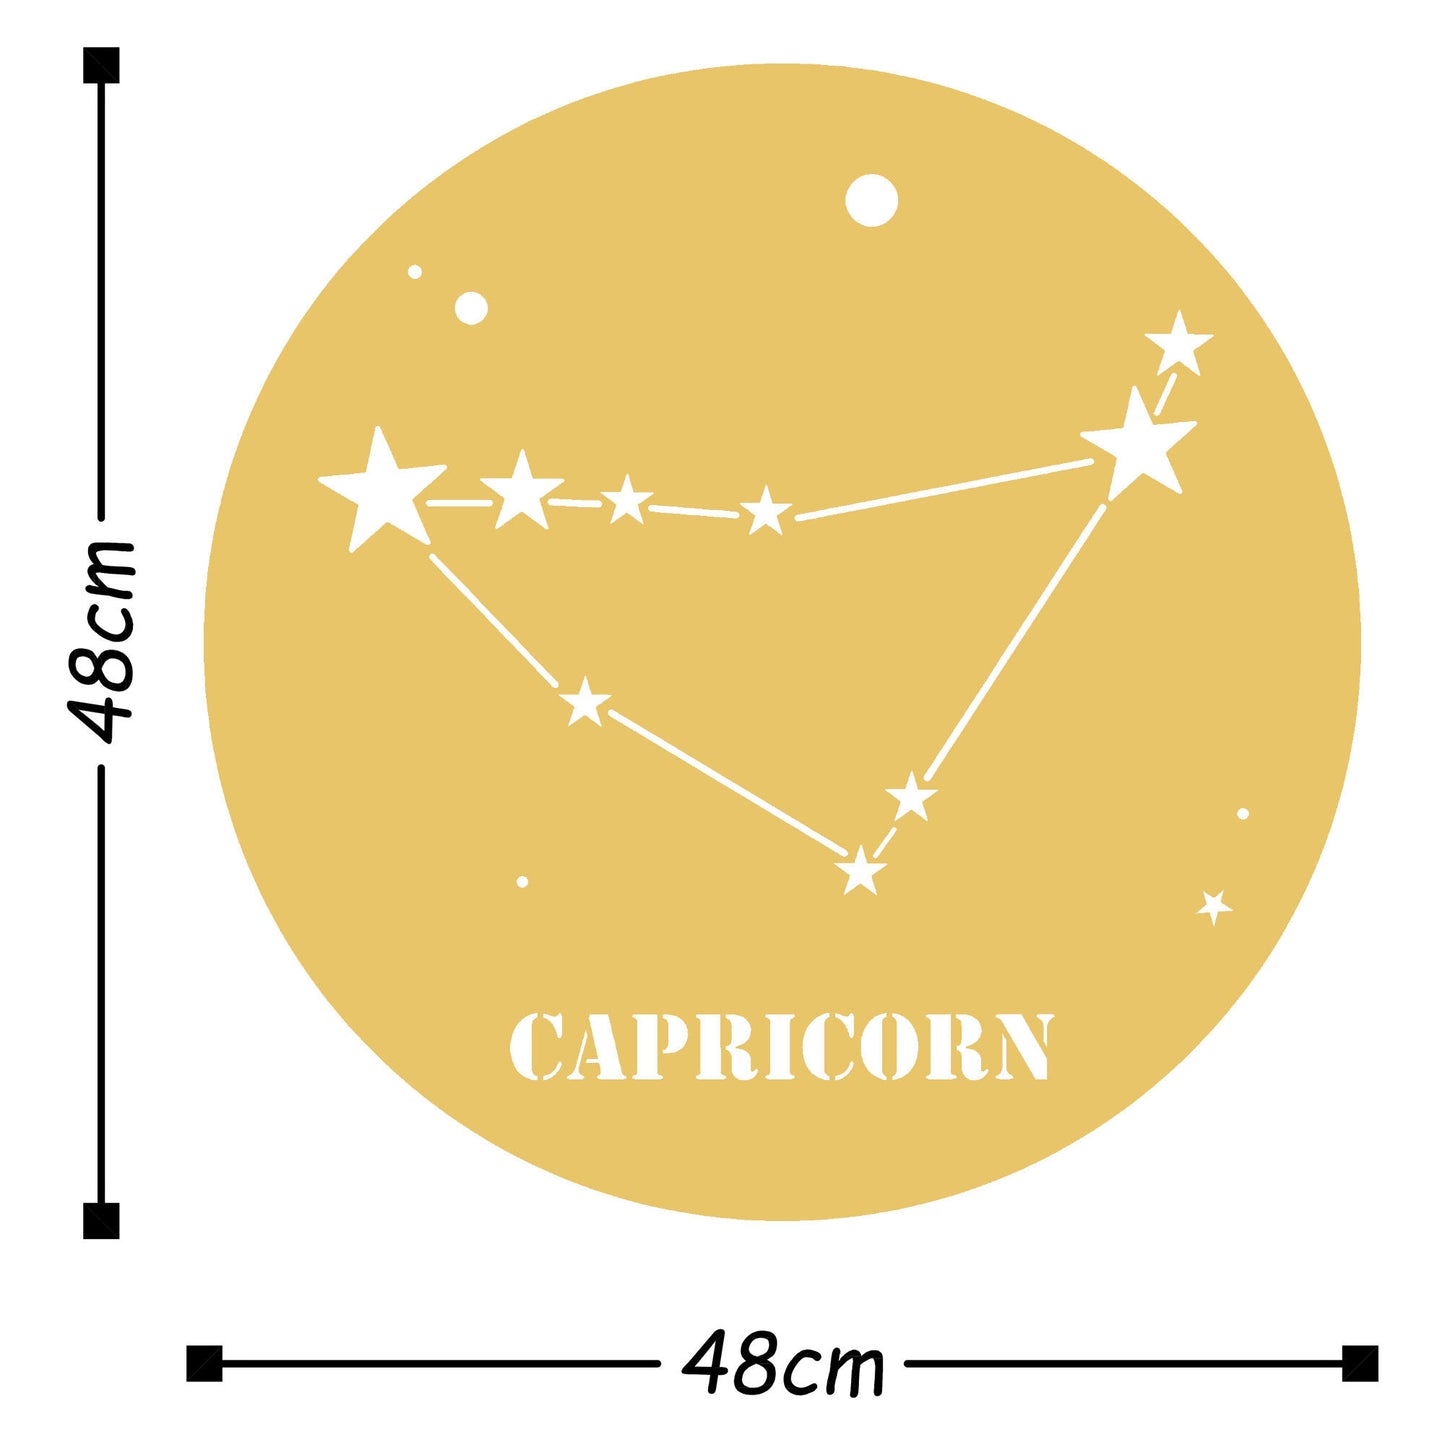 Caprıcorn Horoscope - Gold - Decorative Metal Wall Accessory